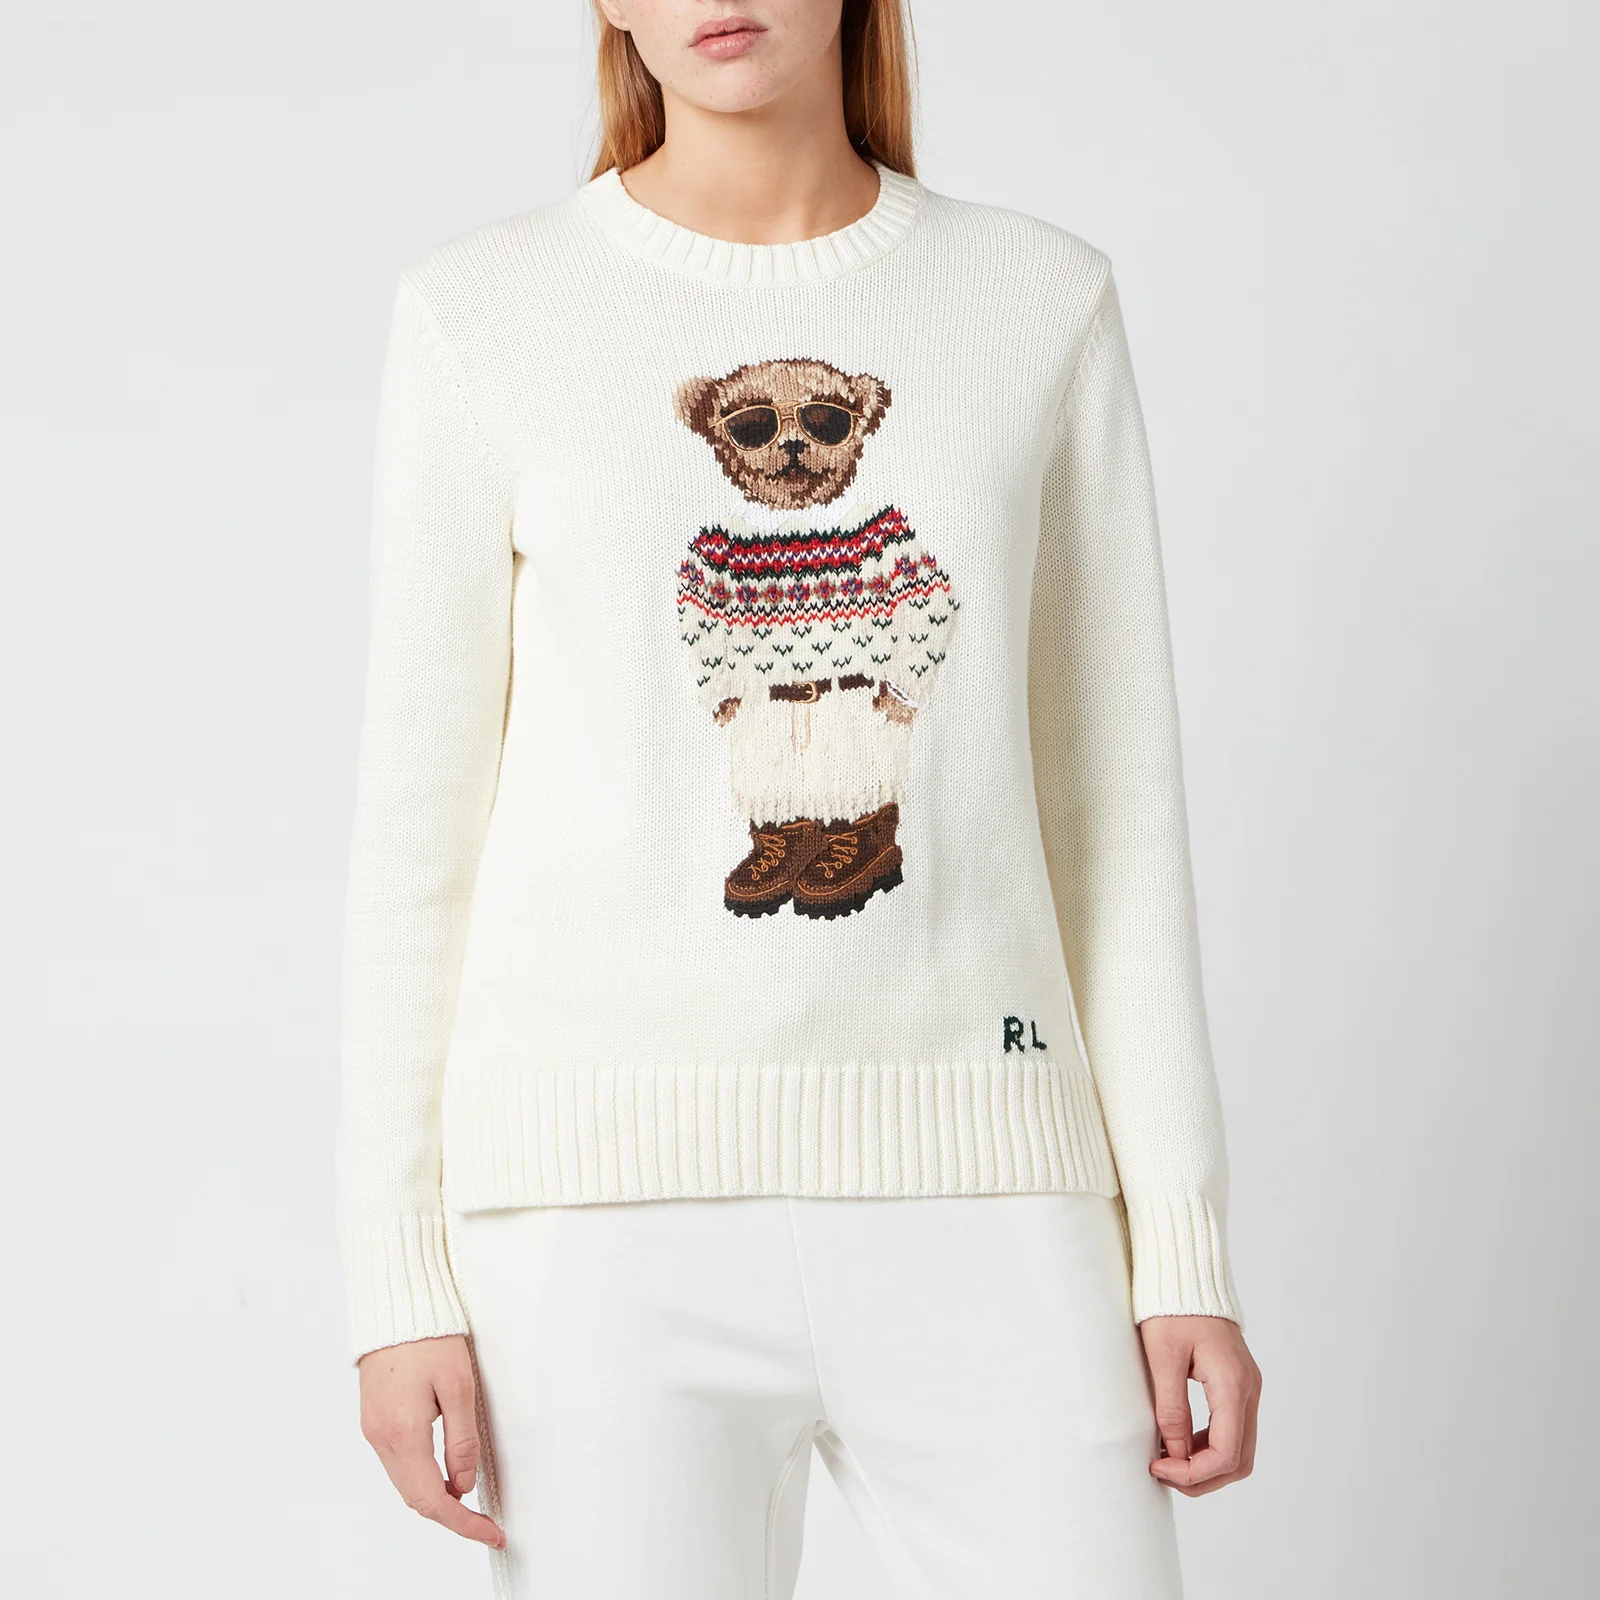 Polo Ralph Lauren Women's Faireisle Bear Sweatshirt - Cream Multi Image 1